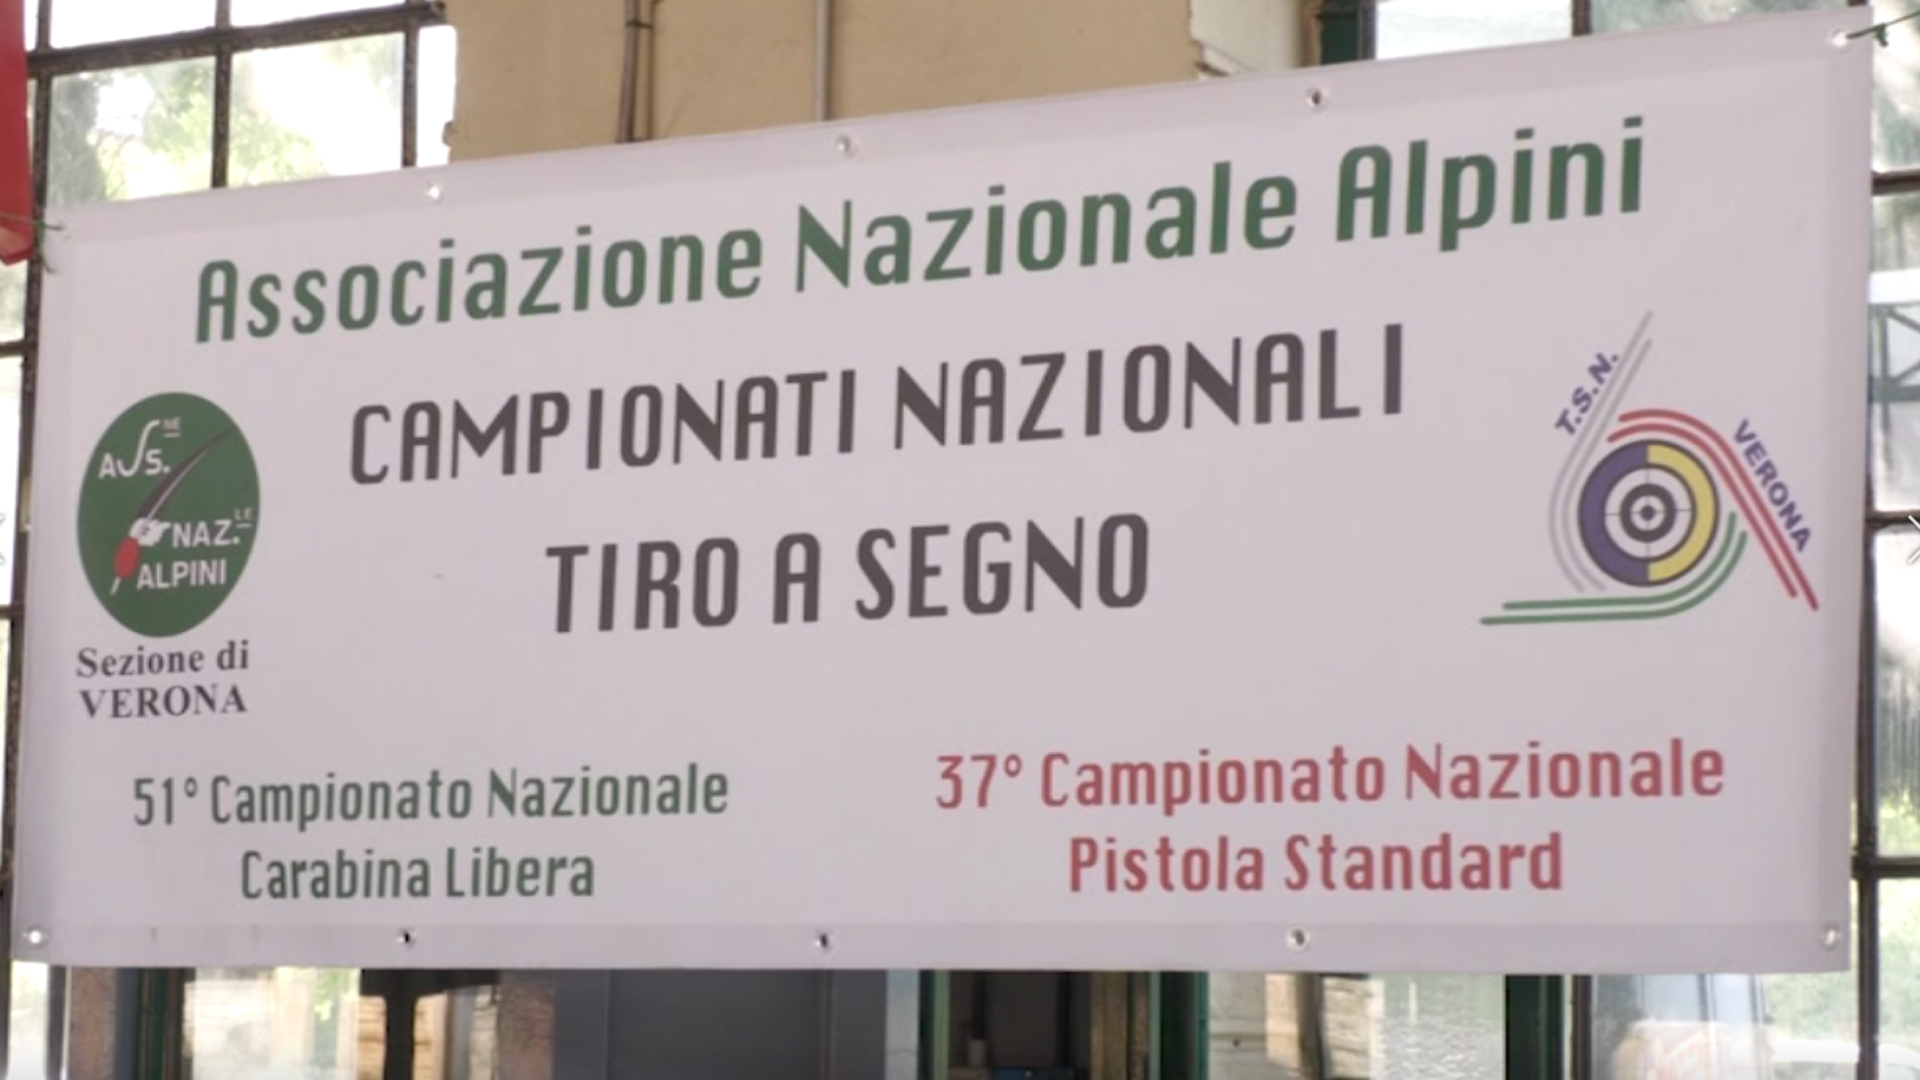 L'Alpino - I Campionati Nazionali di Tiro a segno a Verona